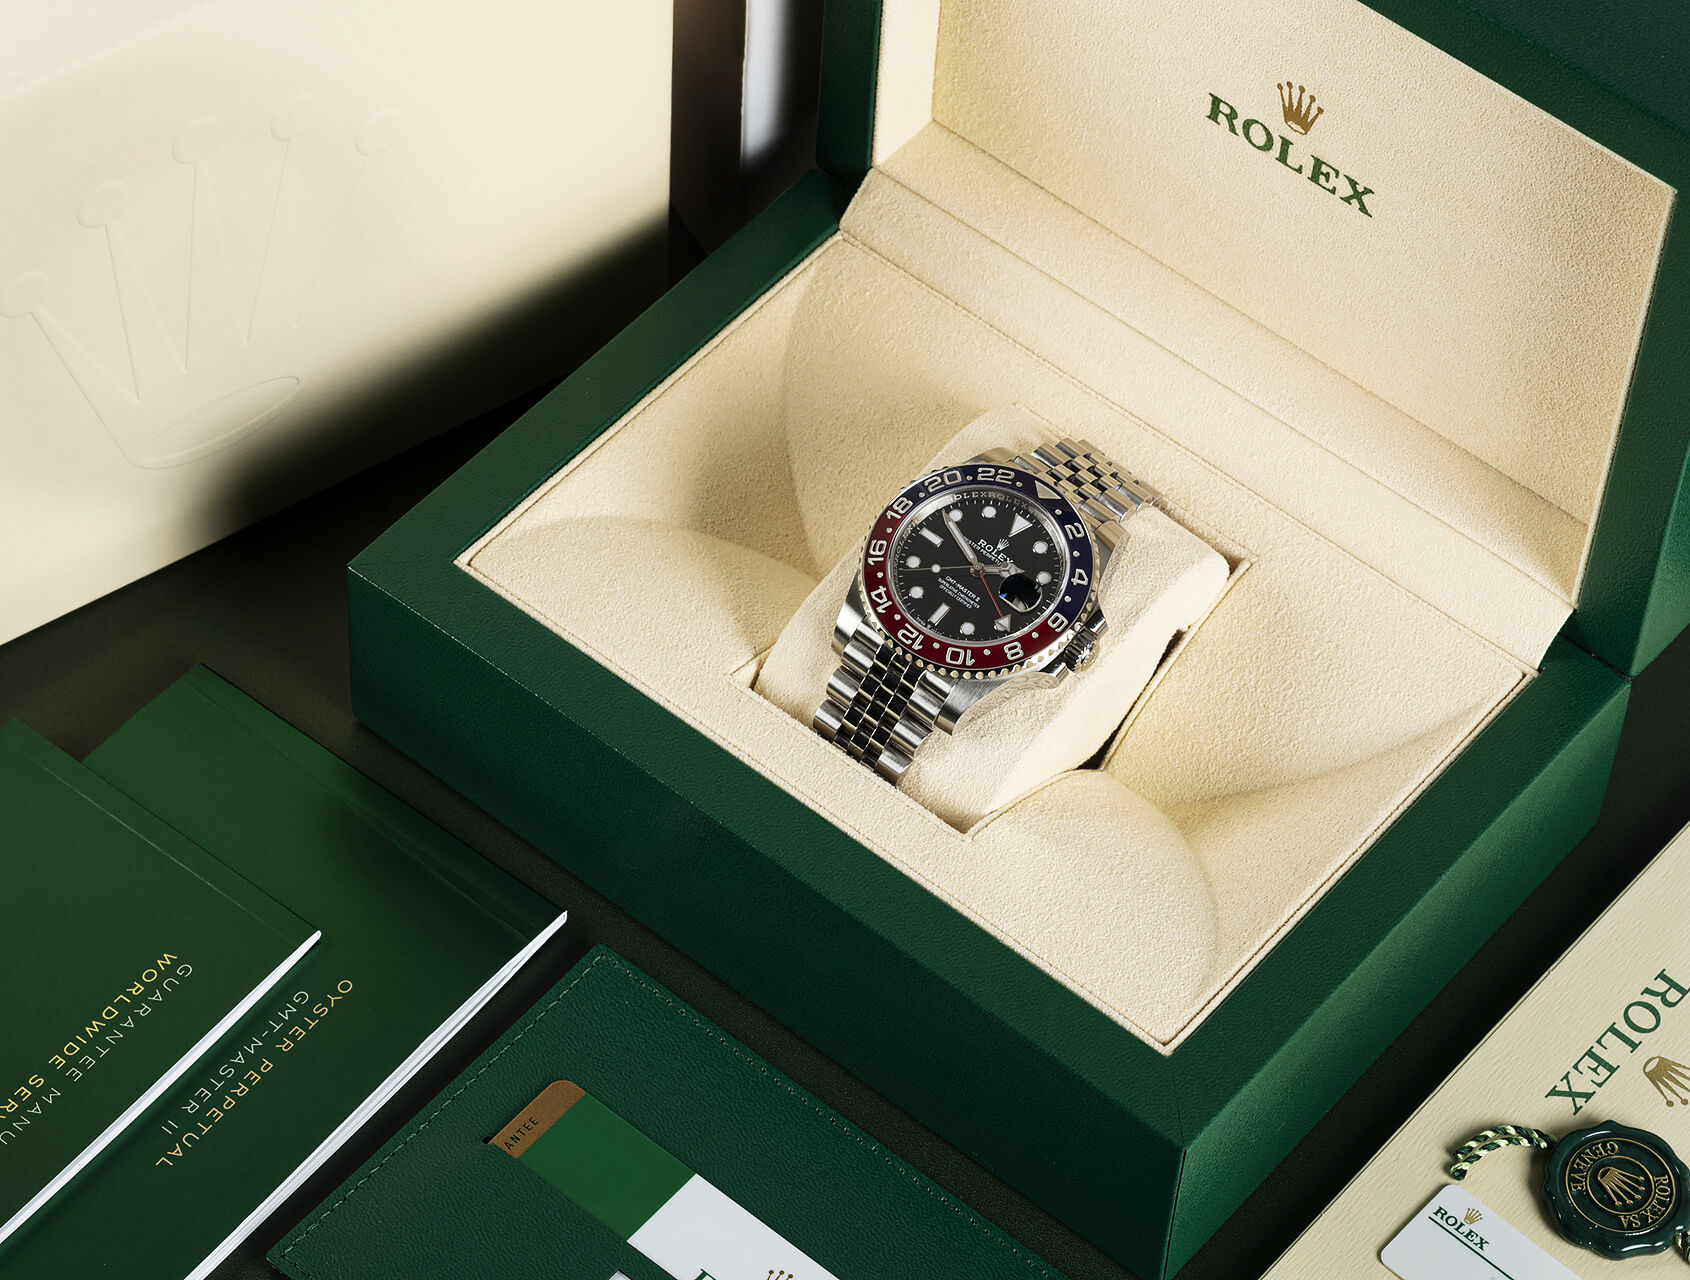 ref 126710BLRO | 126710BLRO - Box & Certificate | Rolex GMT-Master II